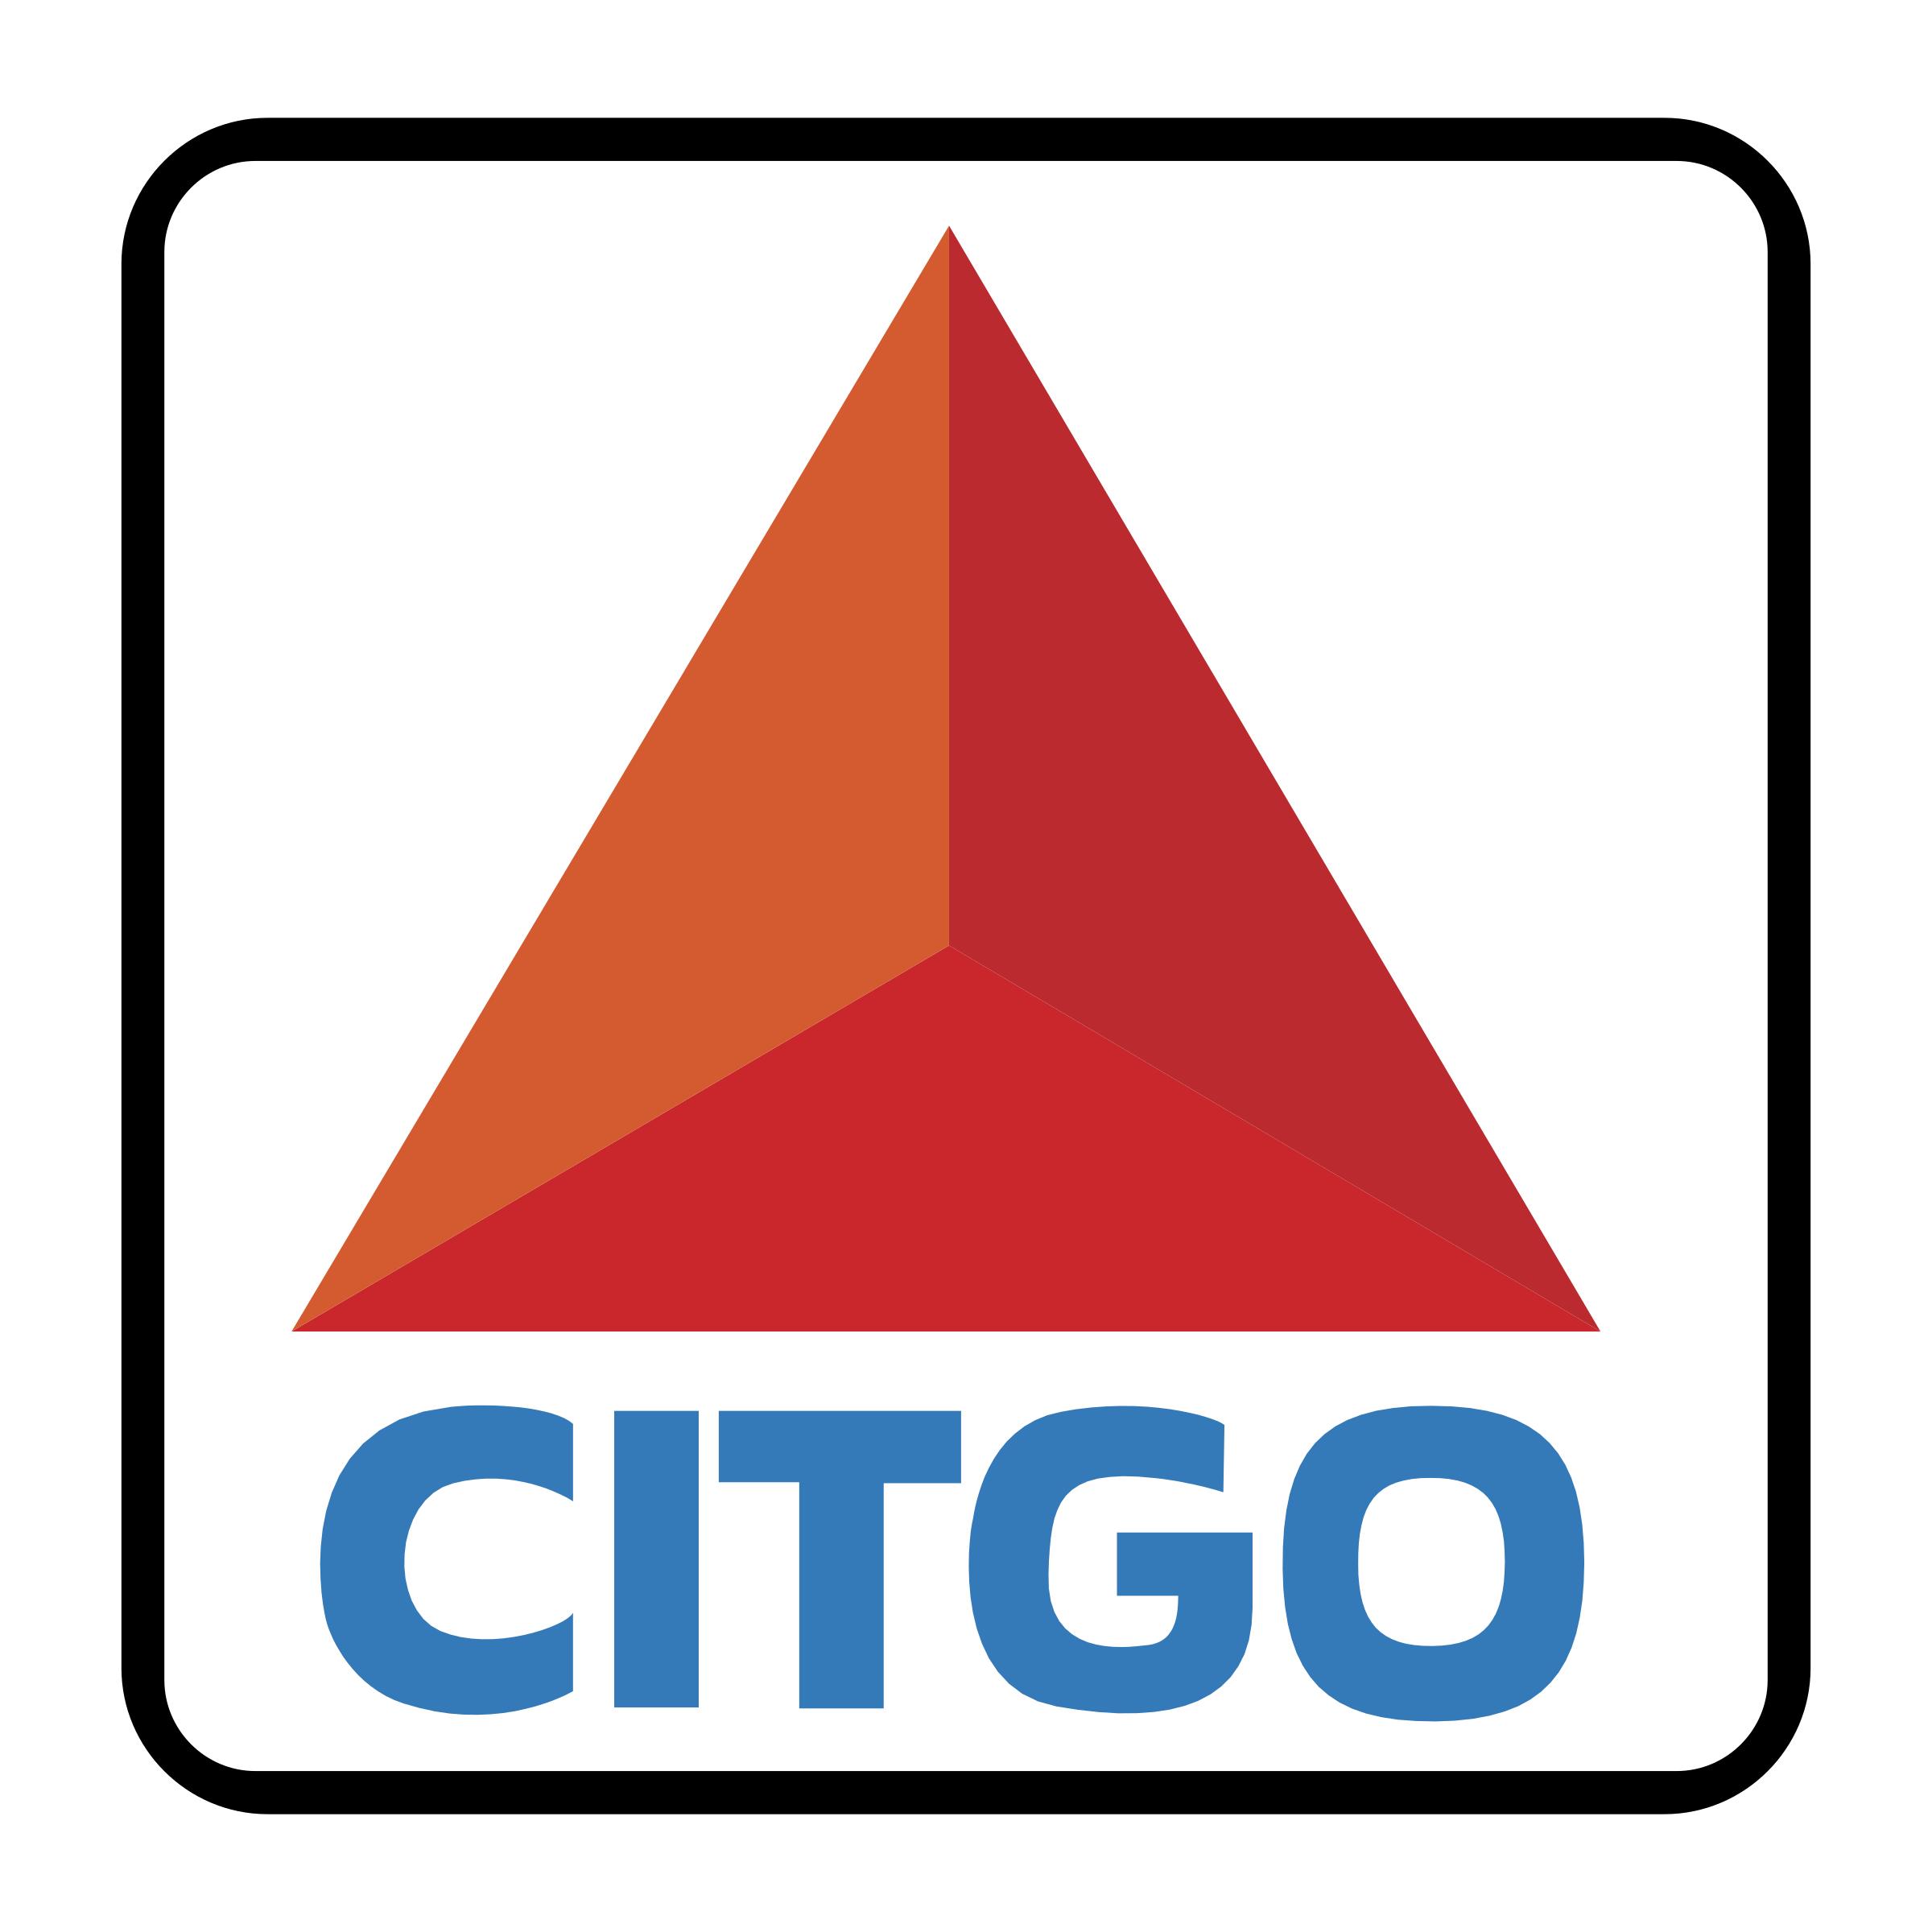 citgo-1-logo-png-transparent.png